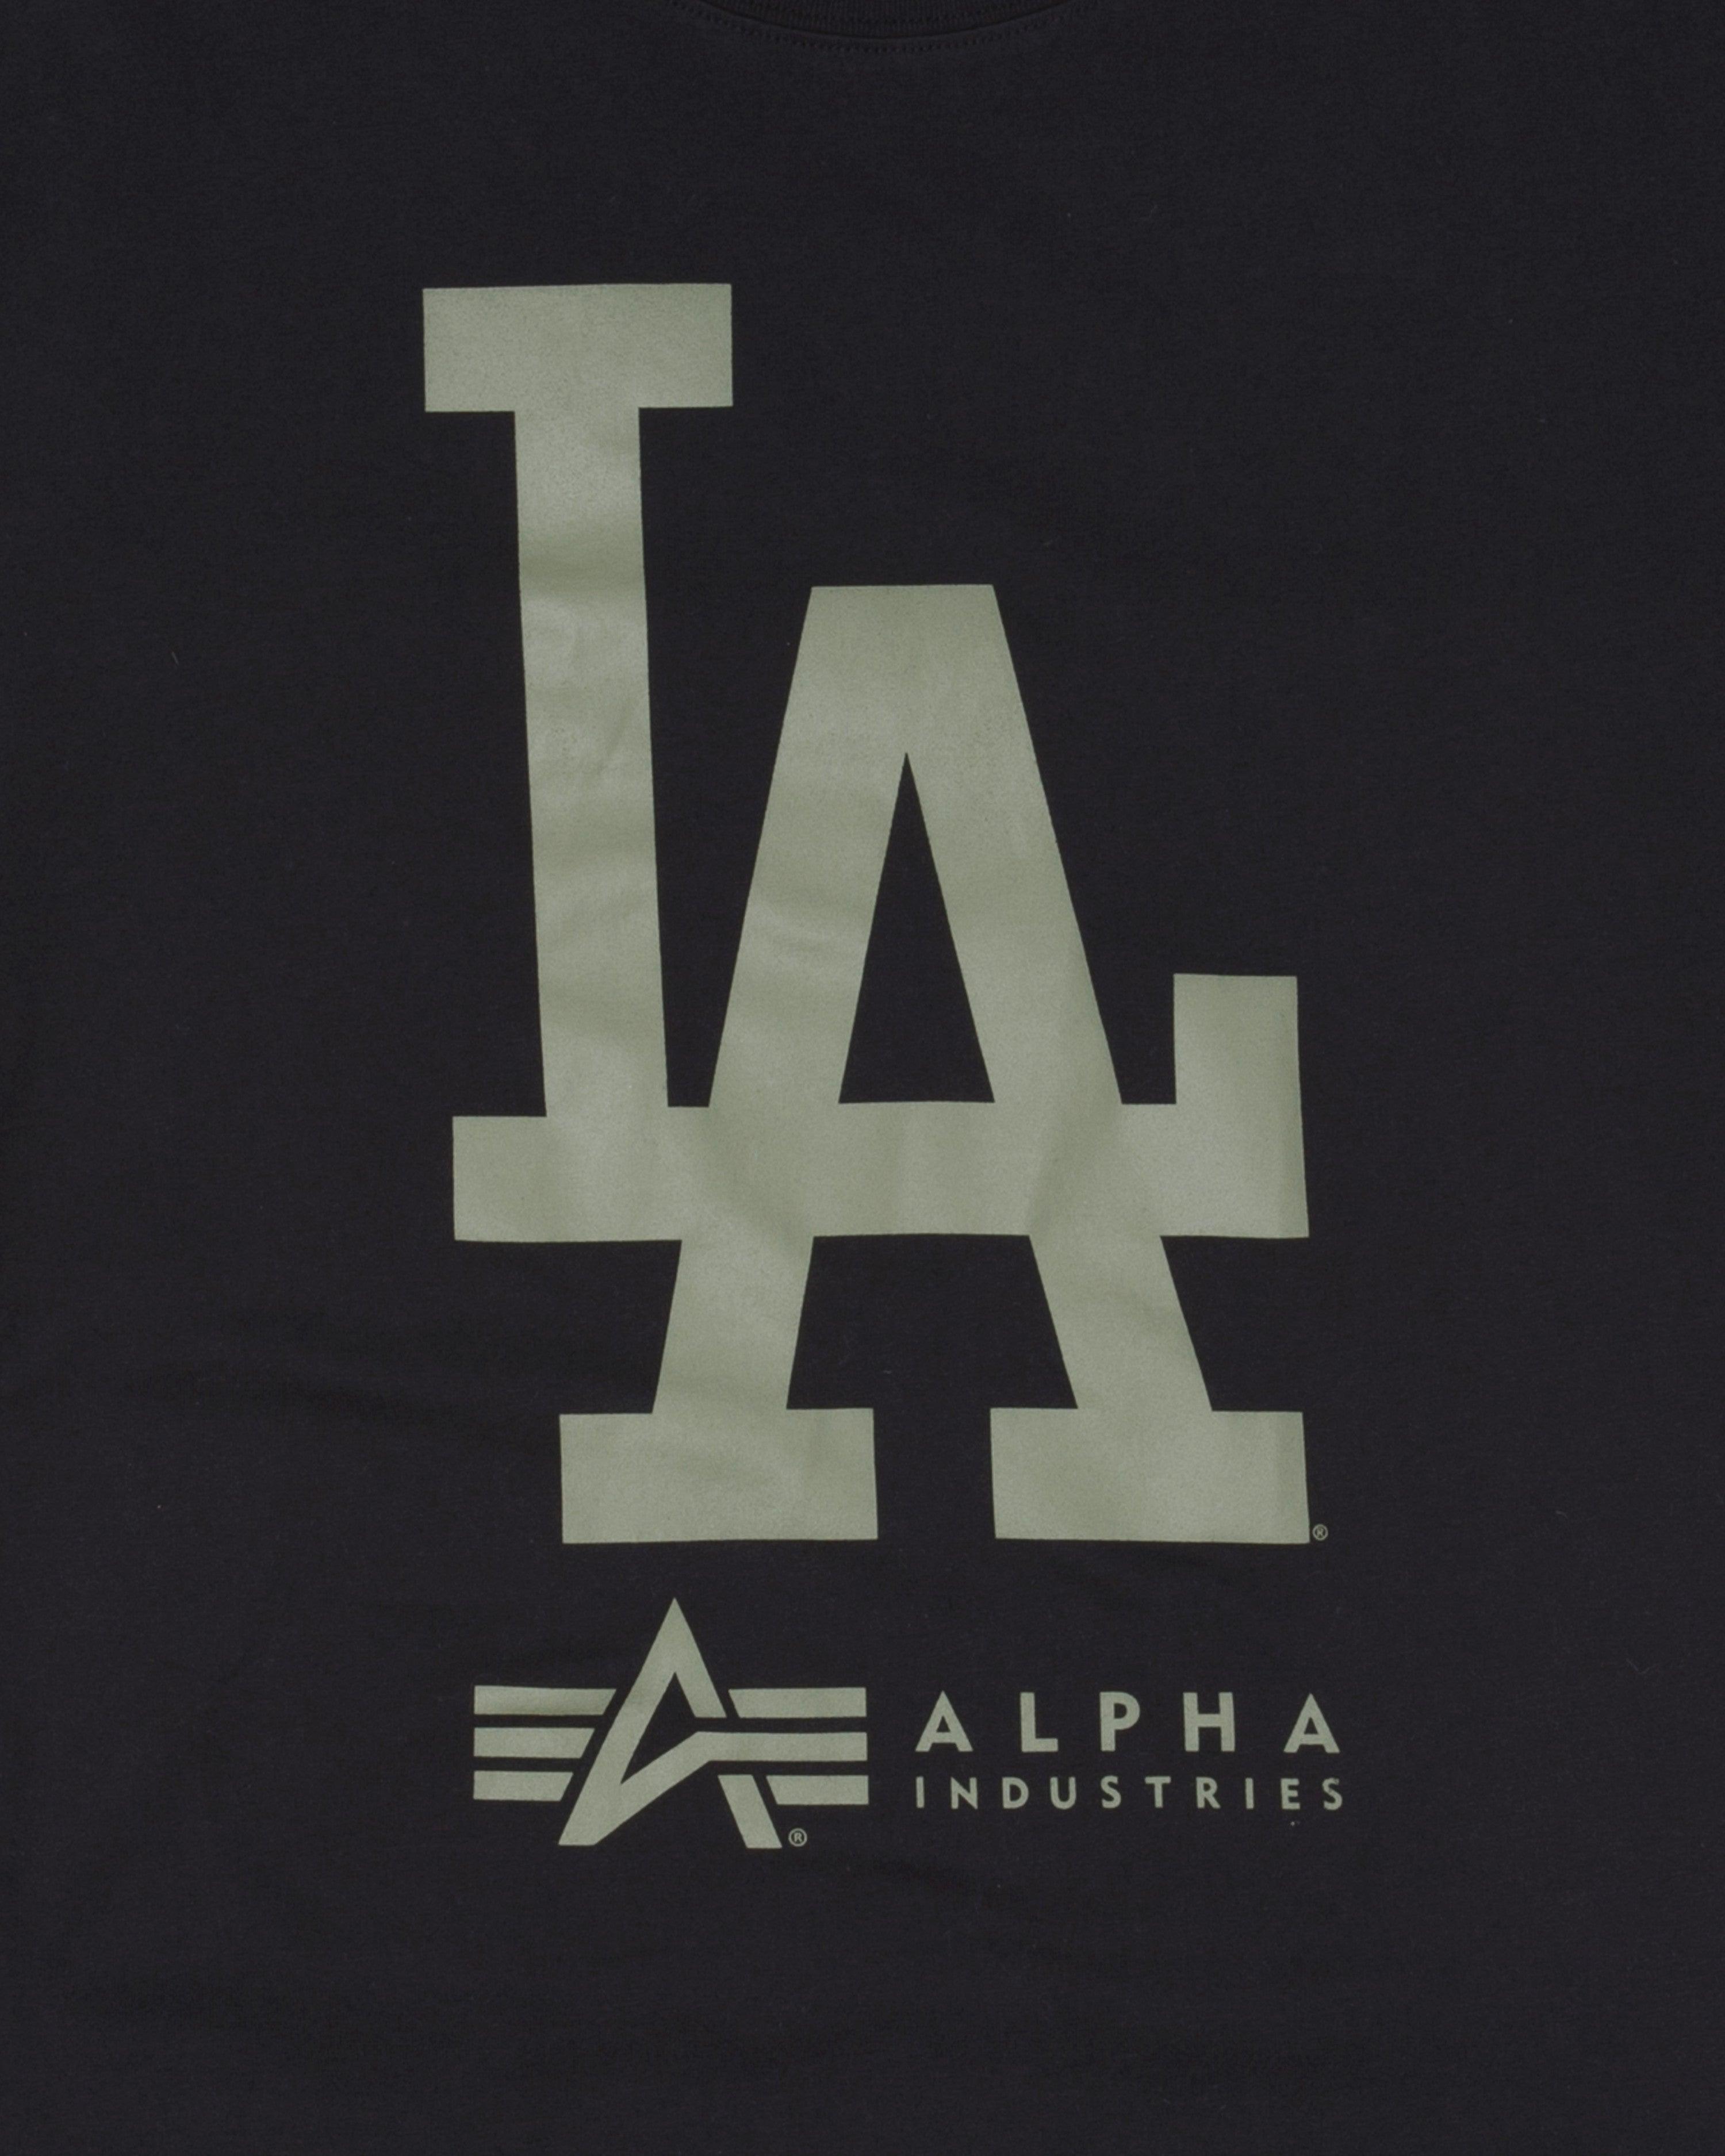 New Era x Alpha Industries Astros T-Shirt - Eight One